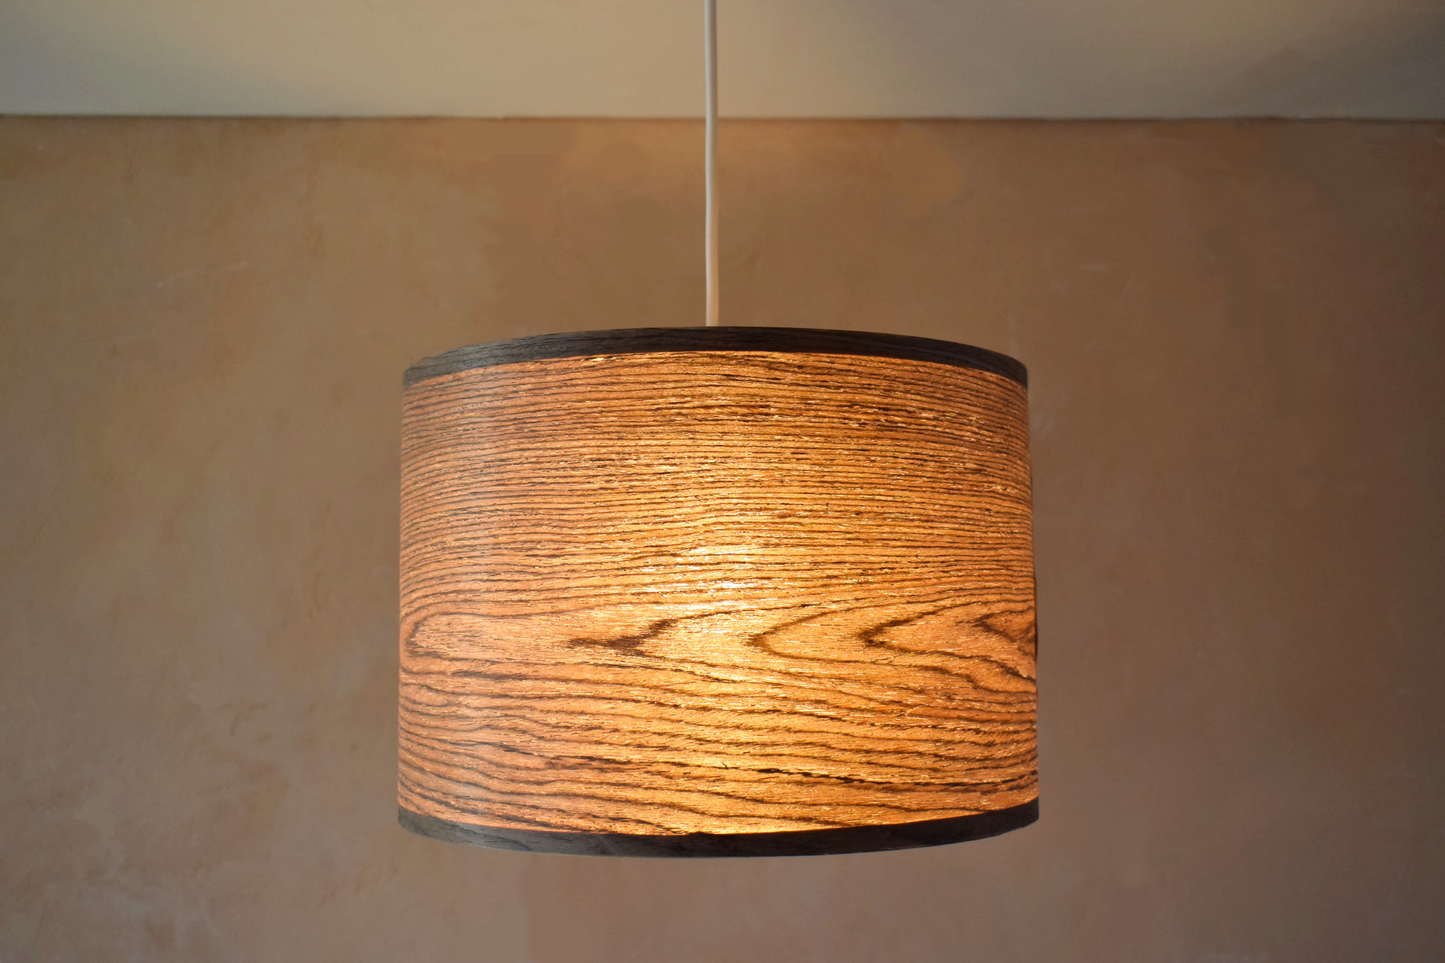 30cm Dark Walnut Wood veneer ceiling pendant light shade